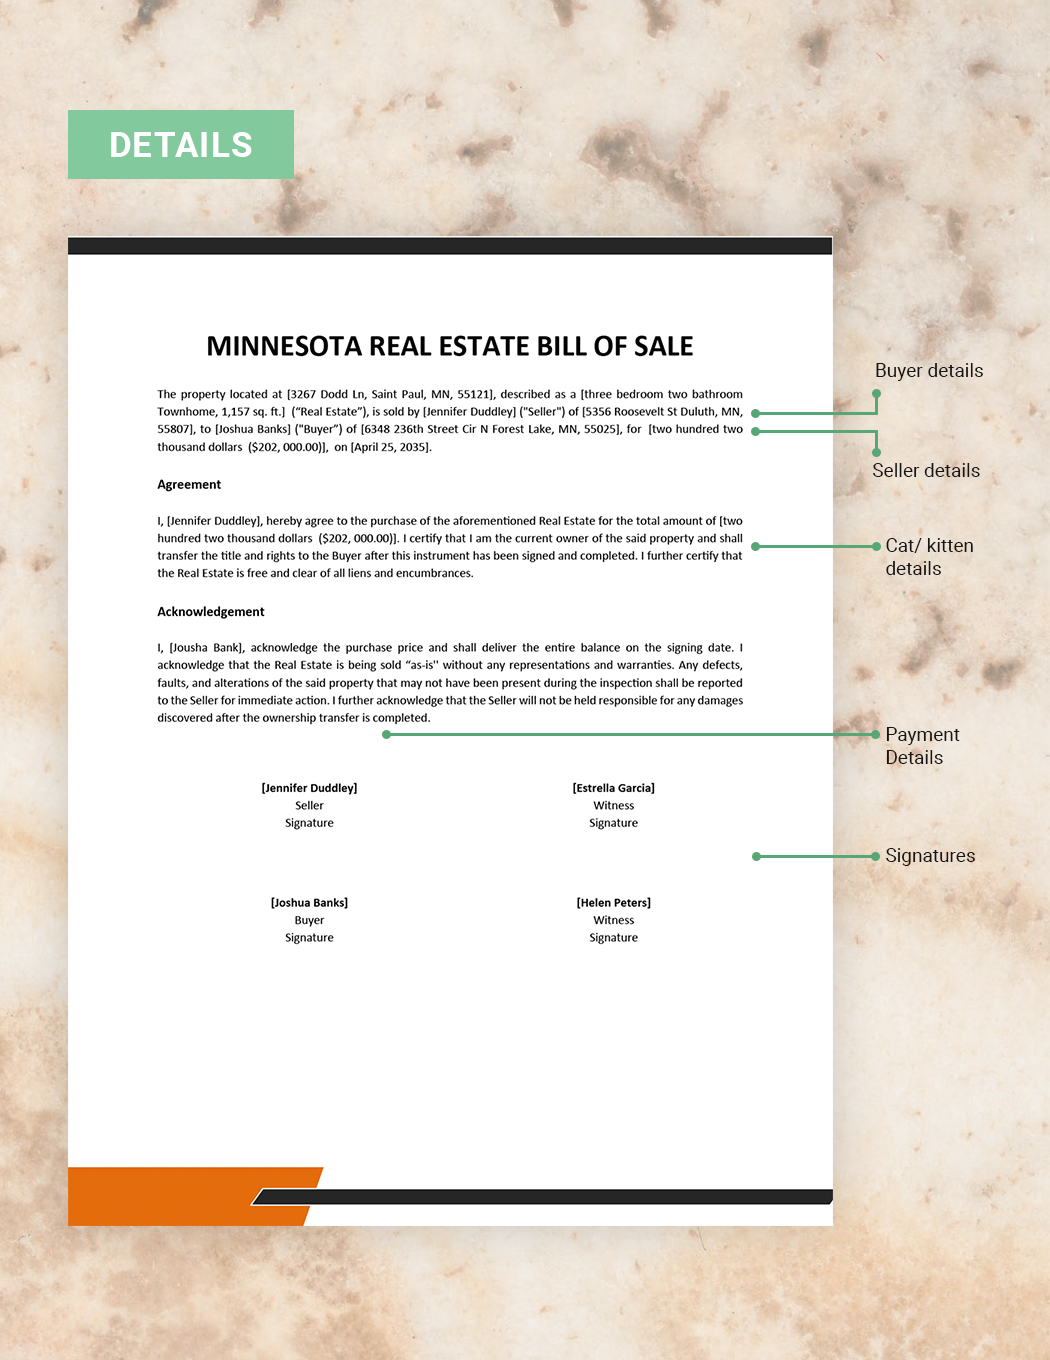 Minnesota Real Estate Bill of Sale Template